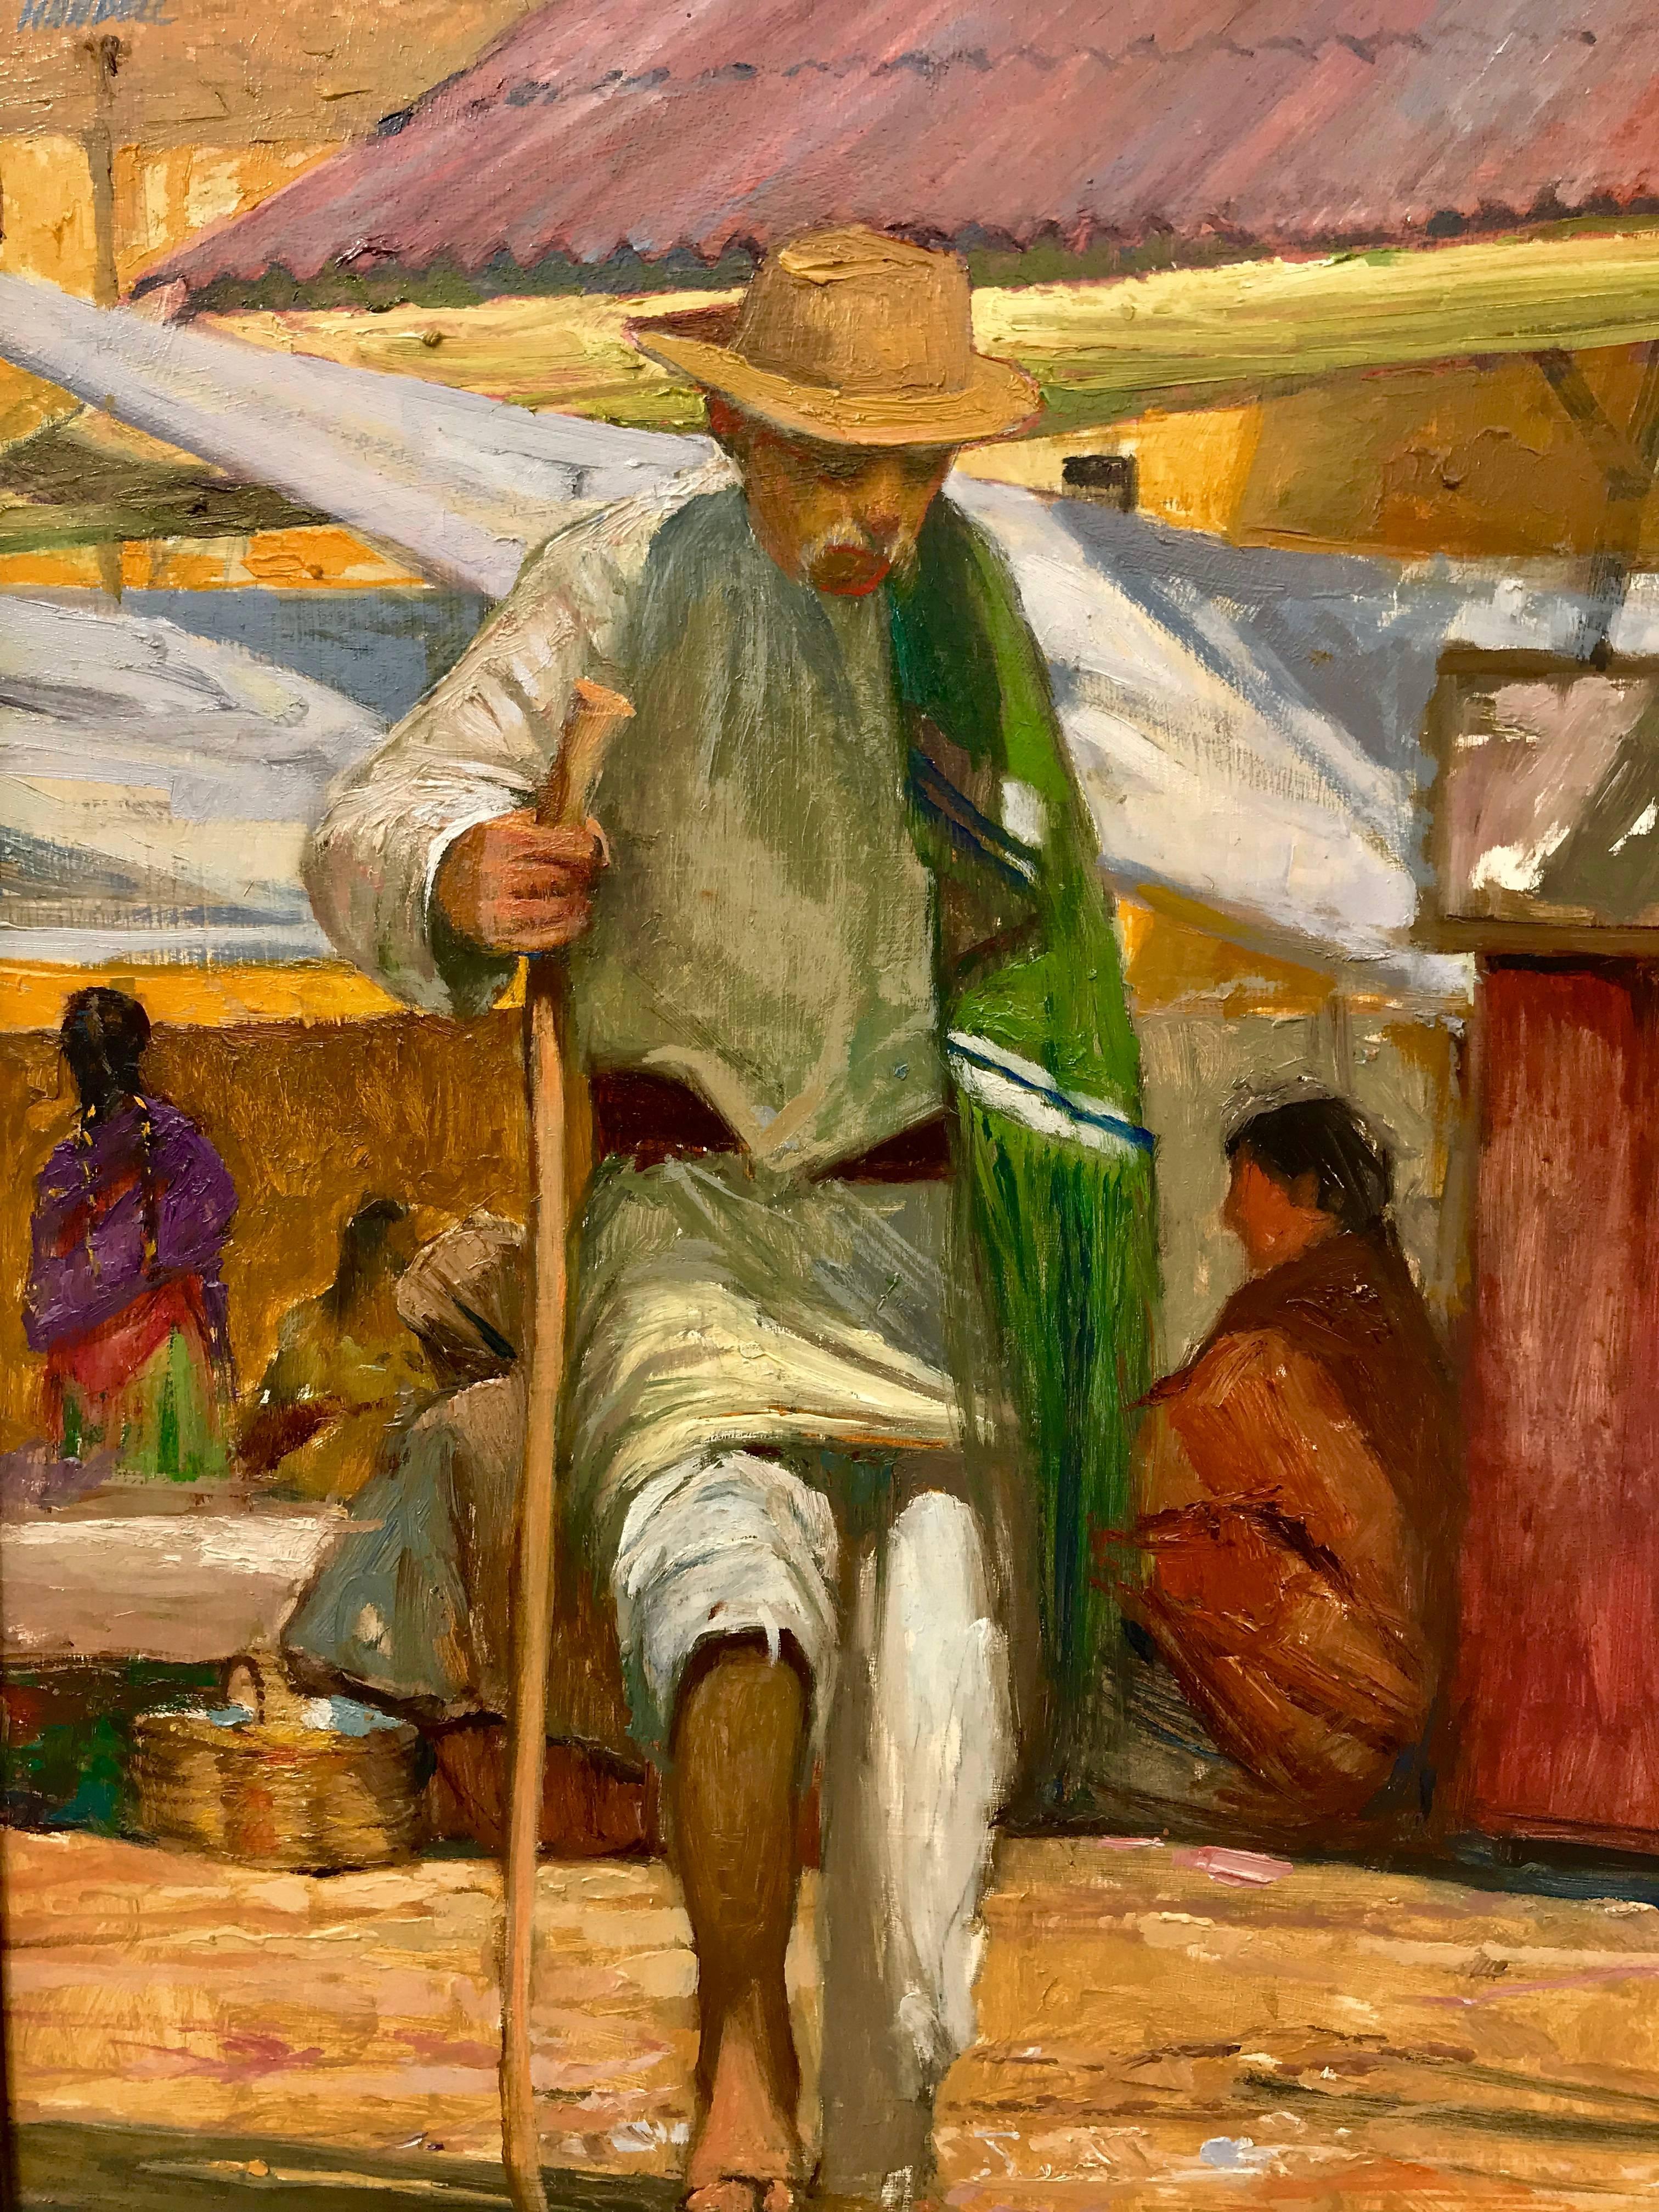 “The Elderly One” - Painting by Albert Handell